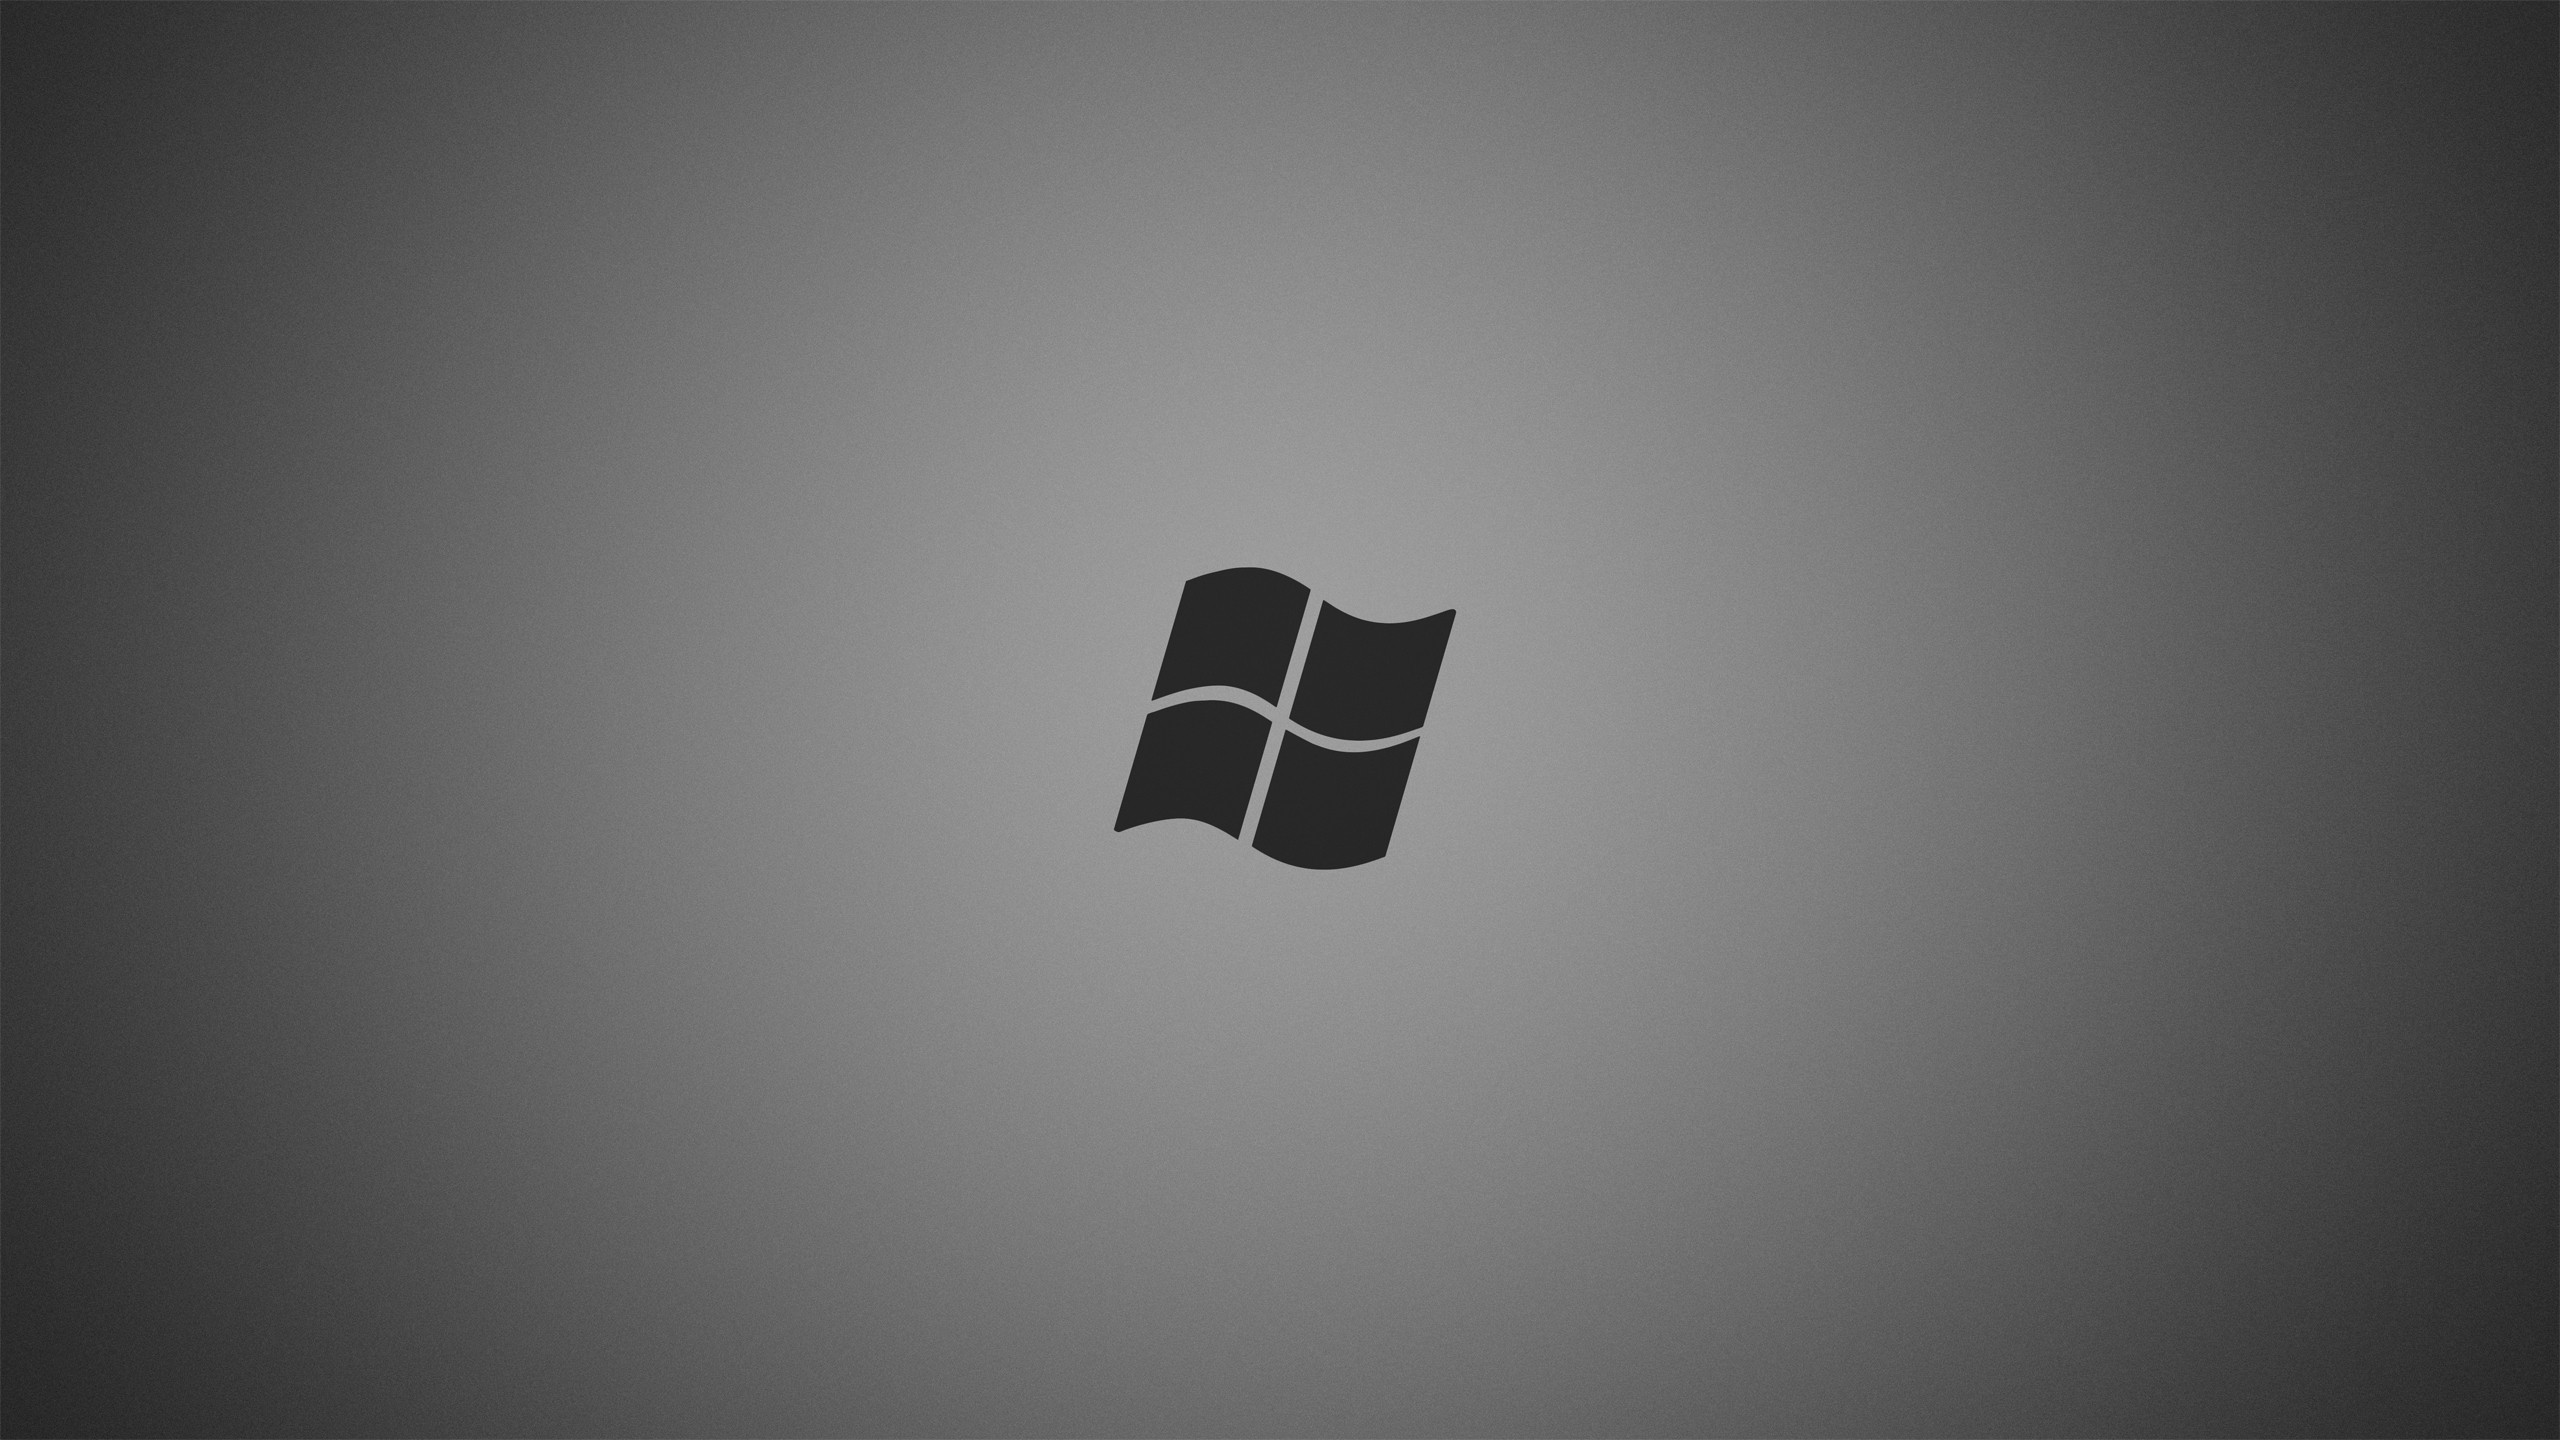 General 2560x1440 Windows 7 Windows 8 Microsoft Windows Windows 10 minimalism logo operating system simple background digital art